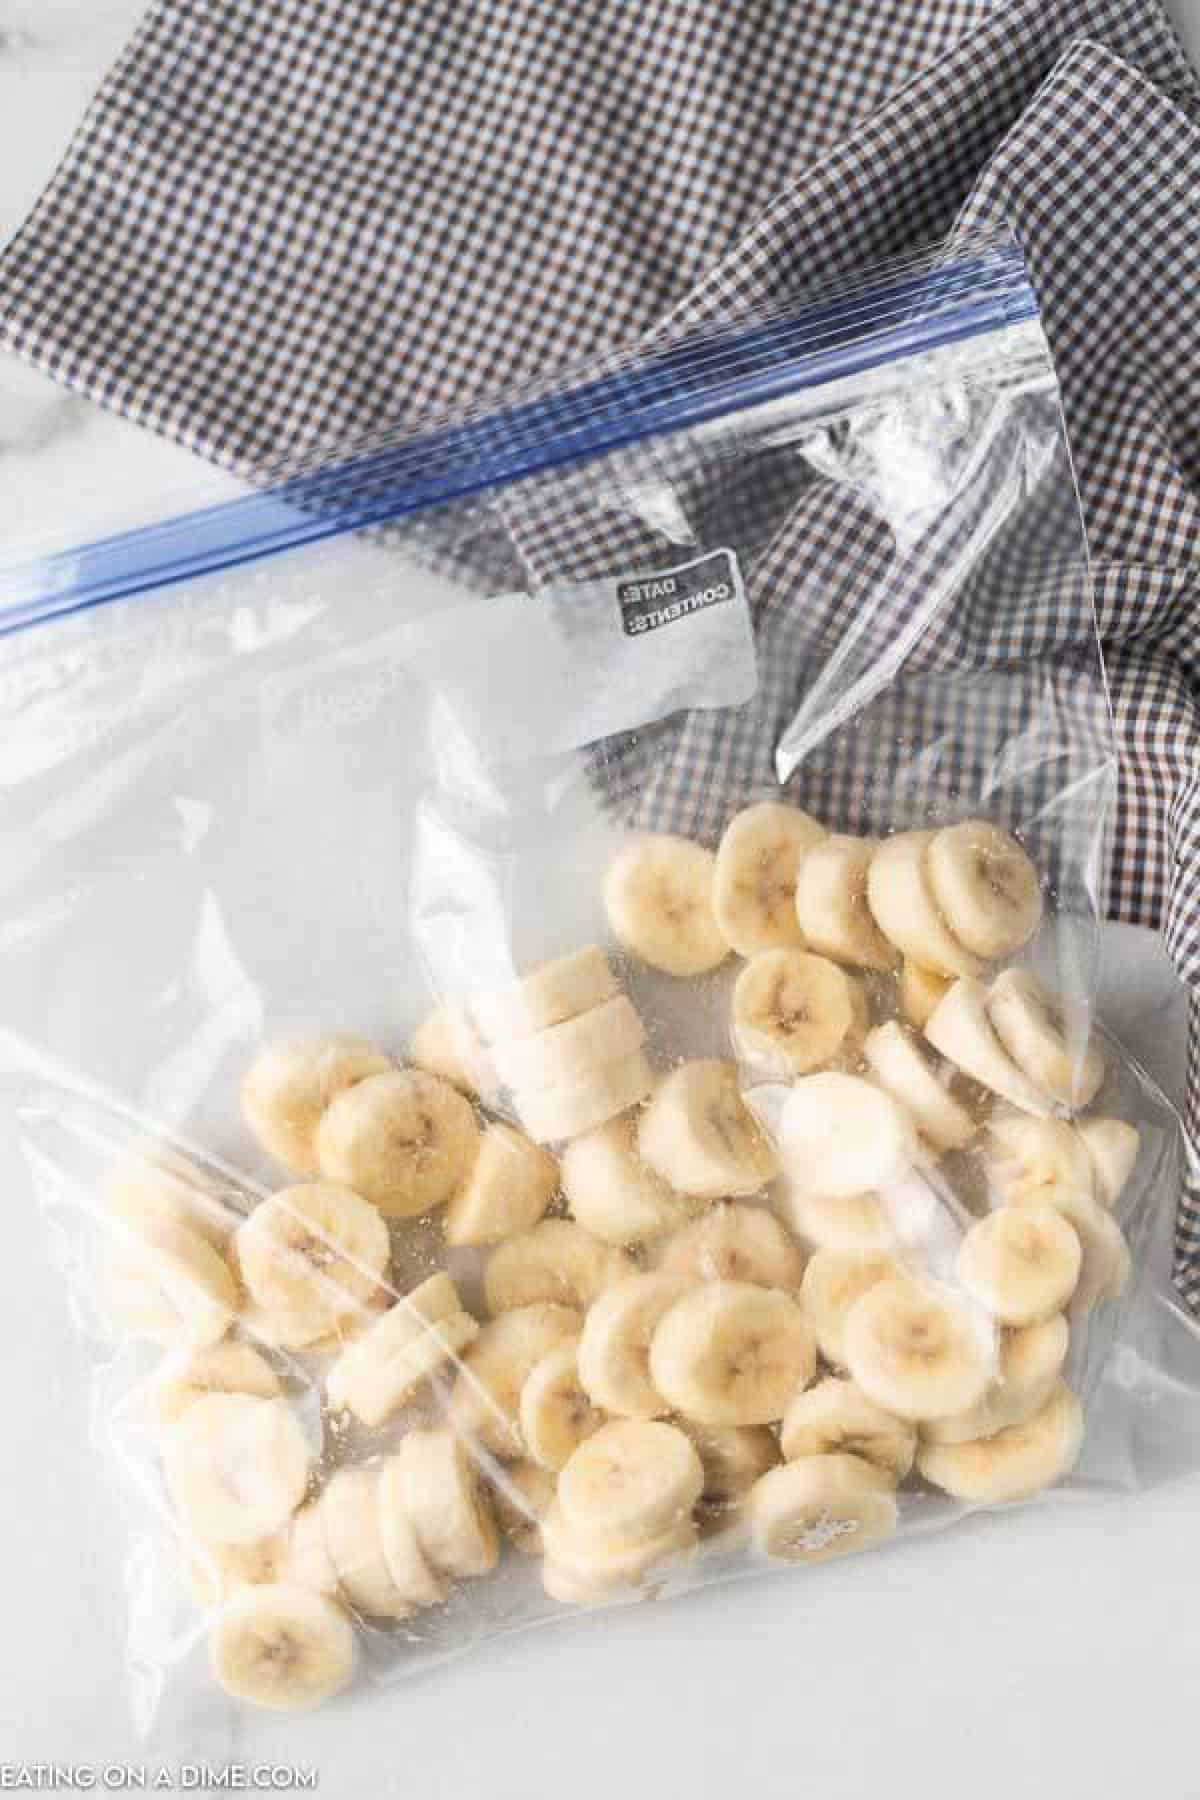 Slice bananas in a zip lock bag